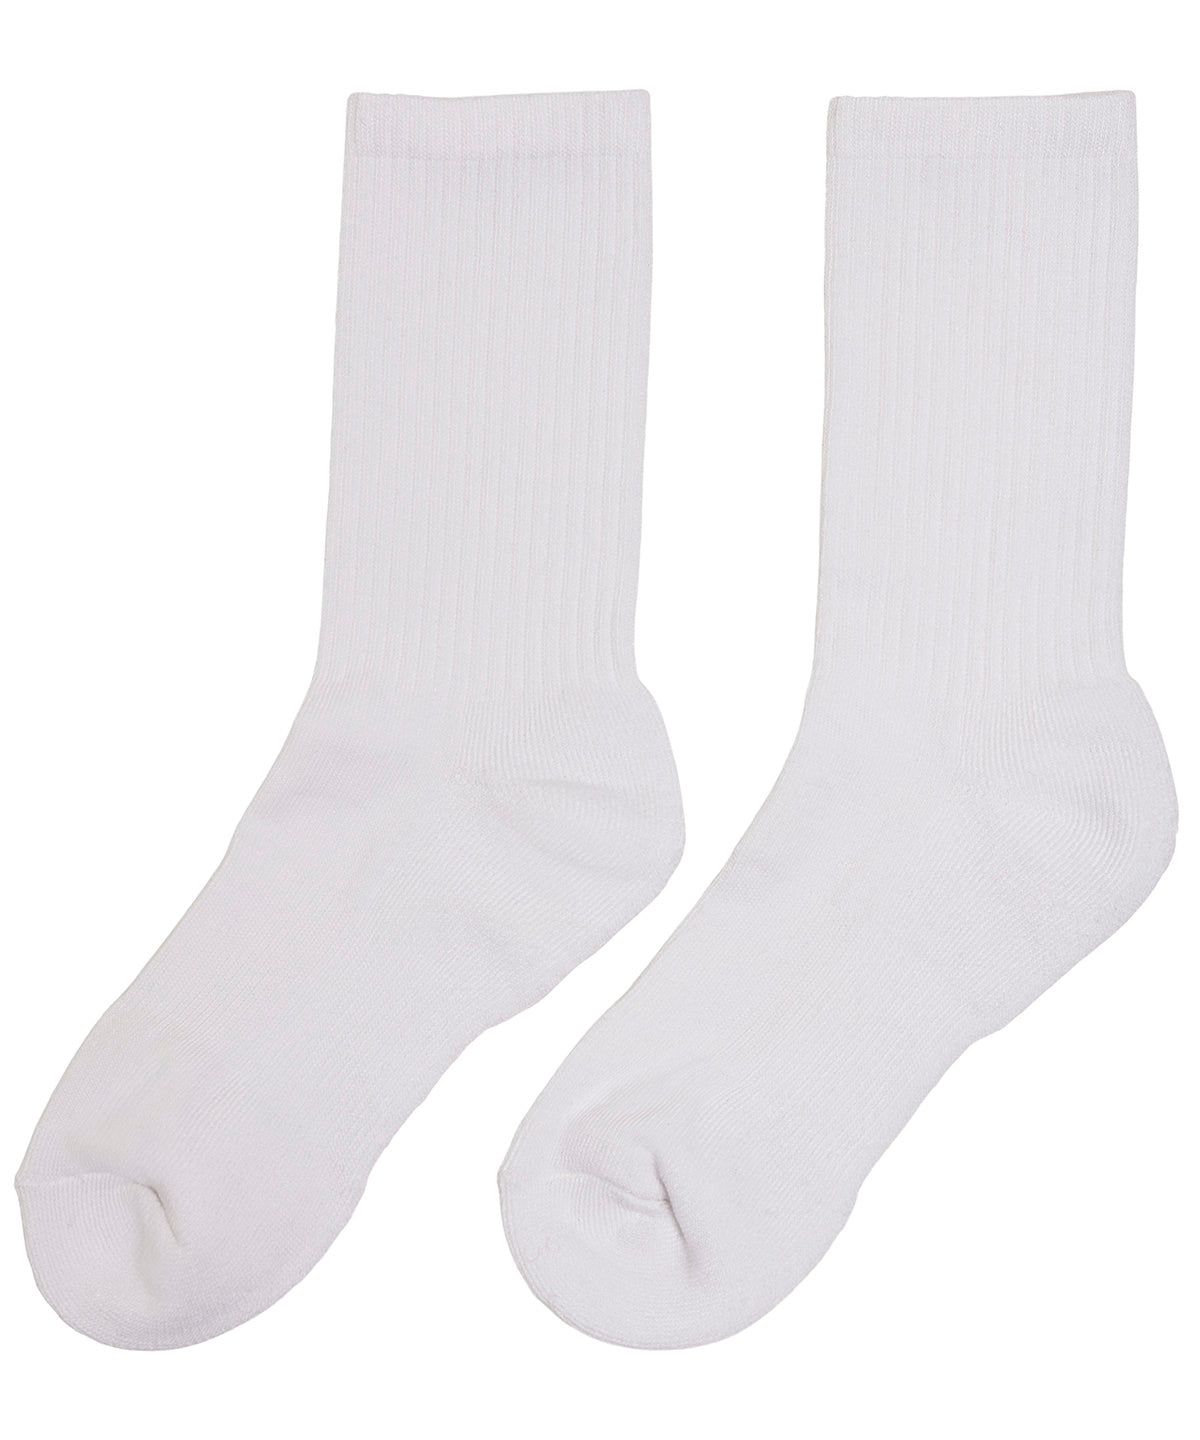 Plain White Training Socks